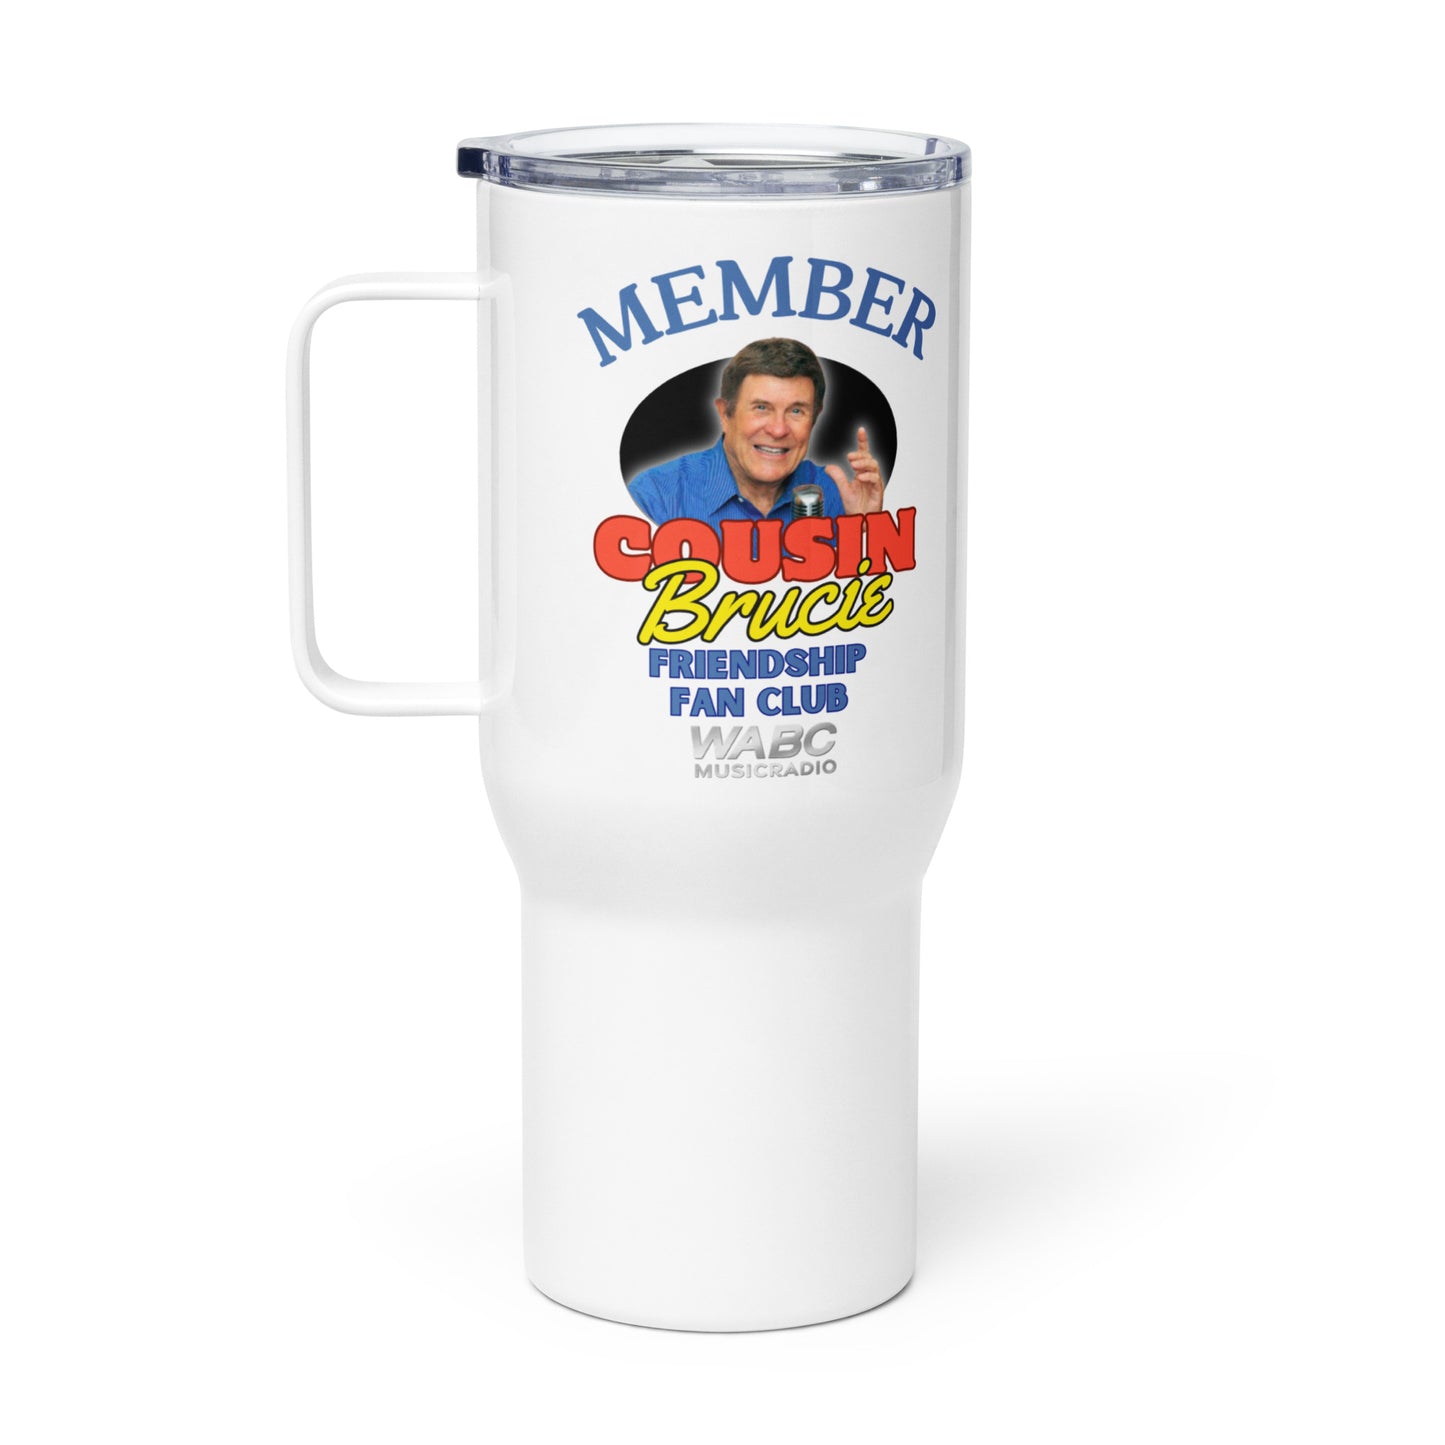 Friendship Fan Club Member Travel mug with a handle